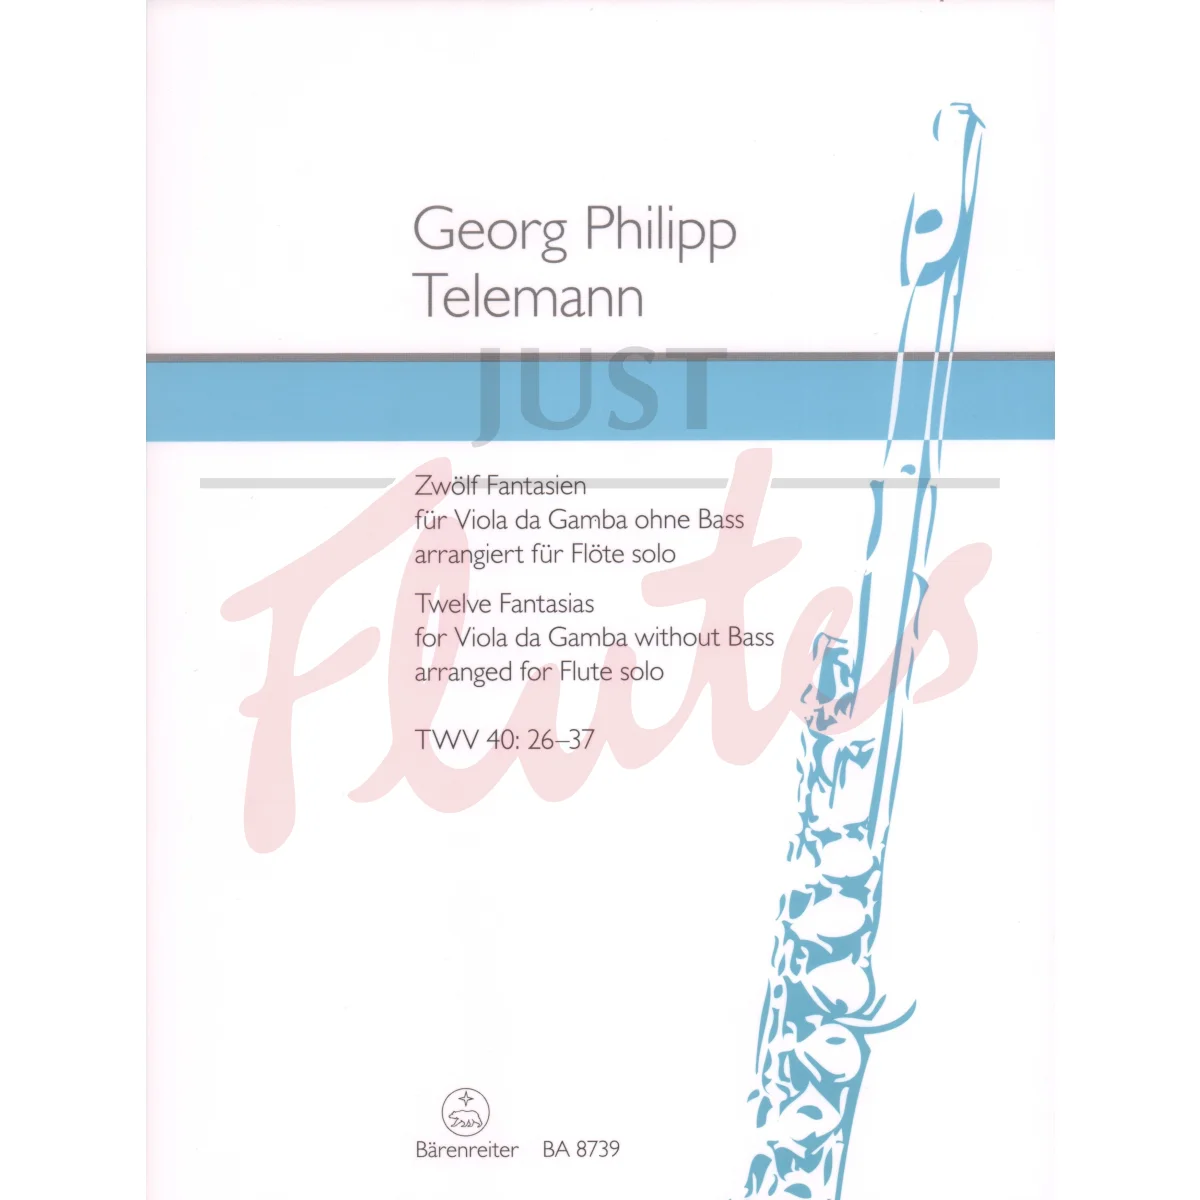 Twelve Fantasias for Viola da gamba without Bass arranged for Flute